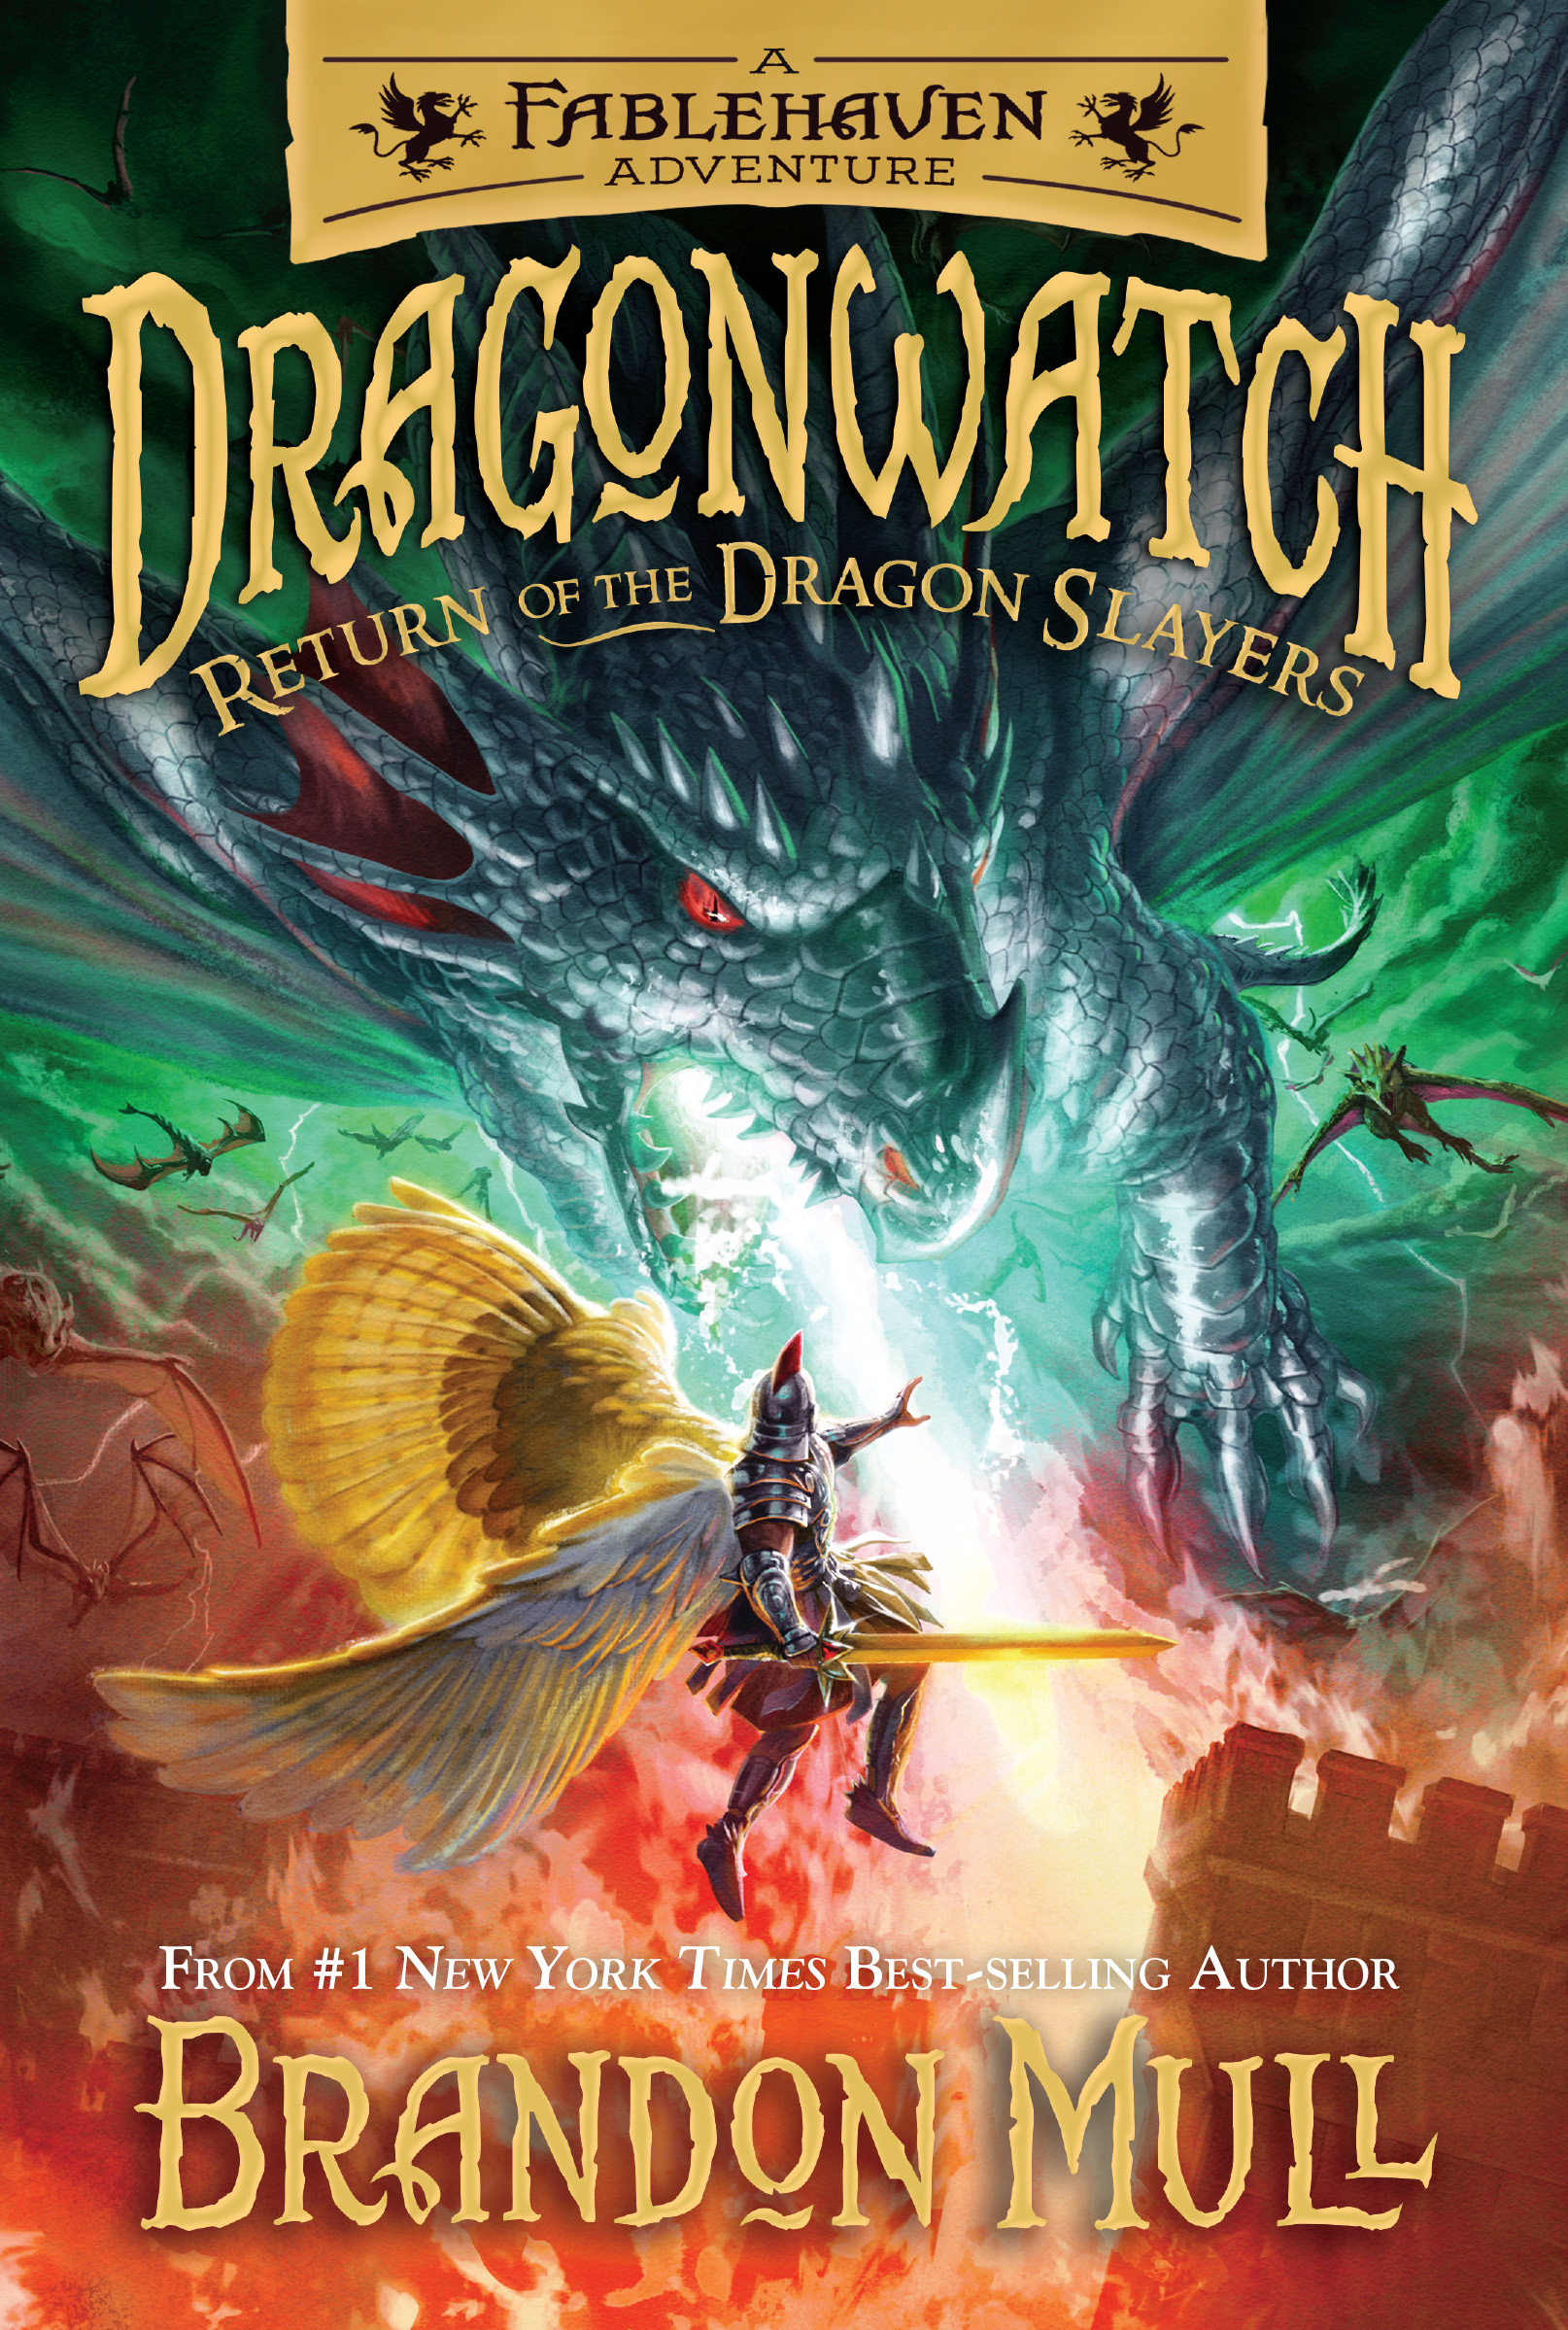 Dragonslayer (novel) - Wikipedia